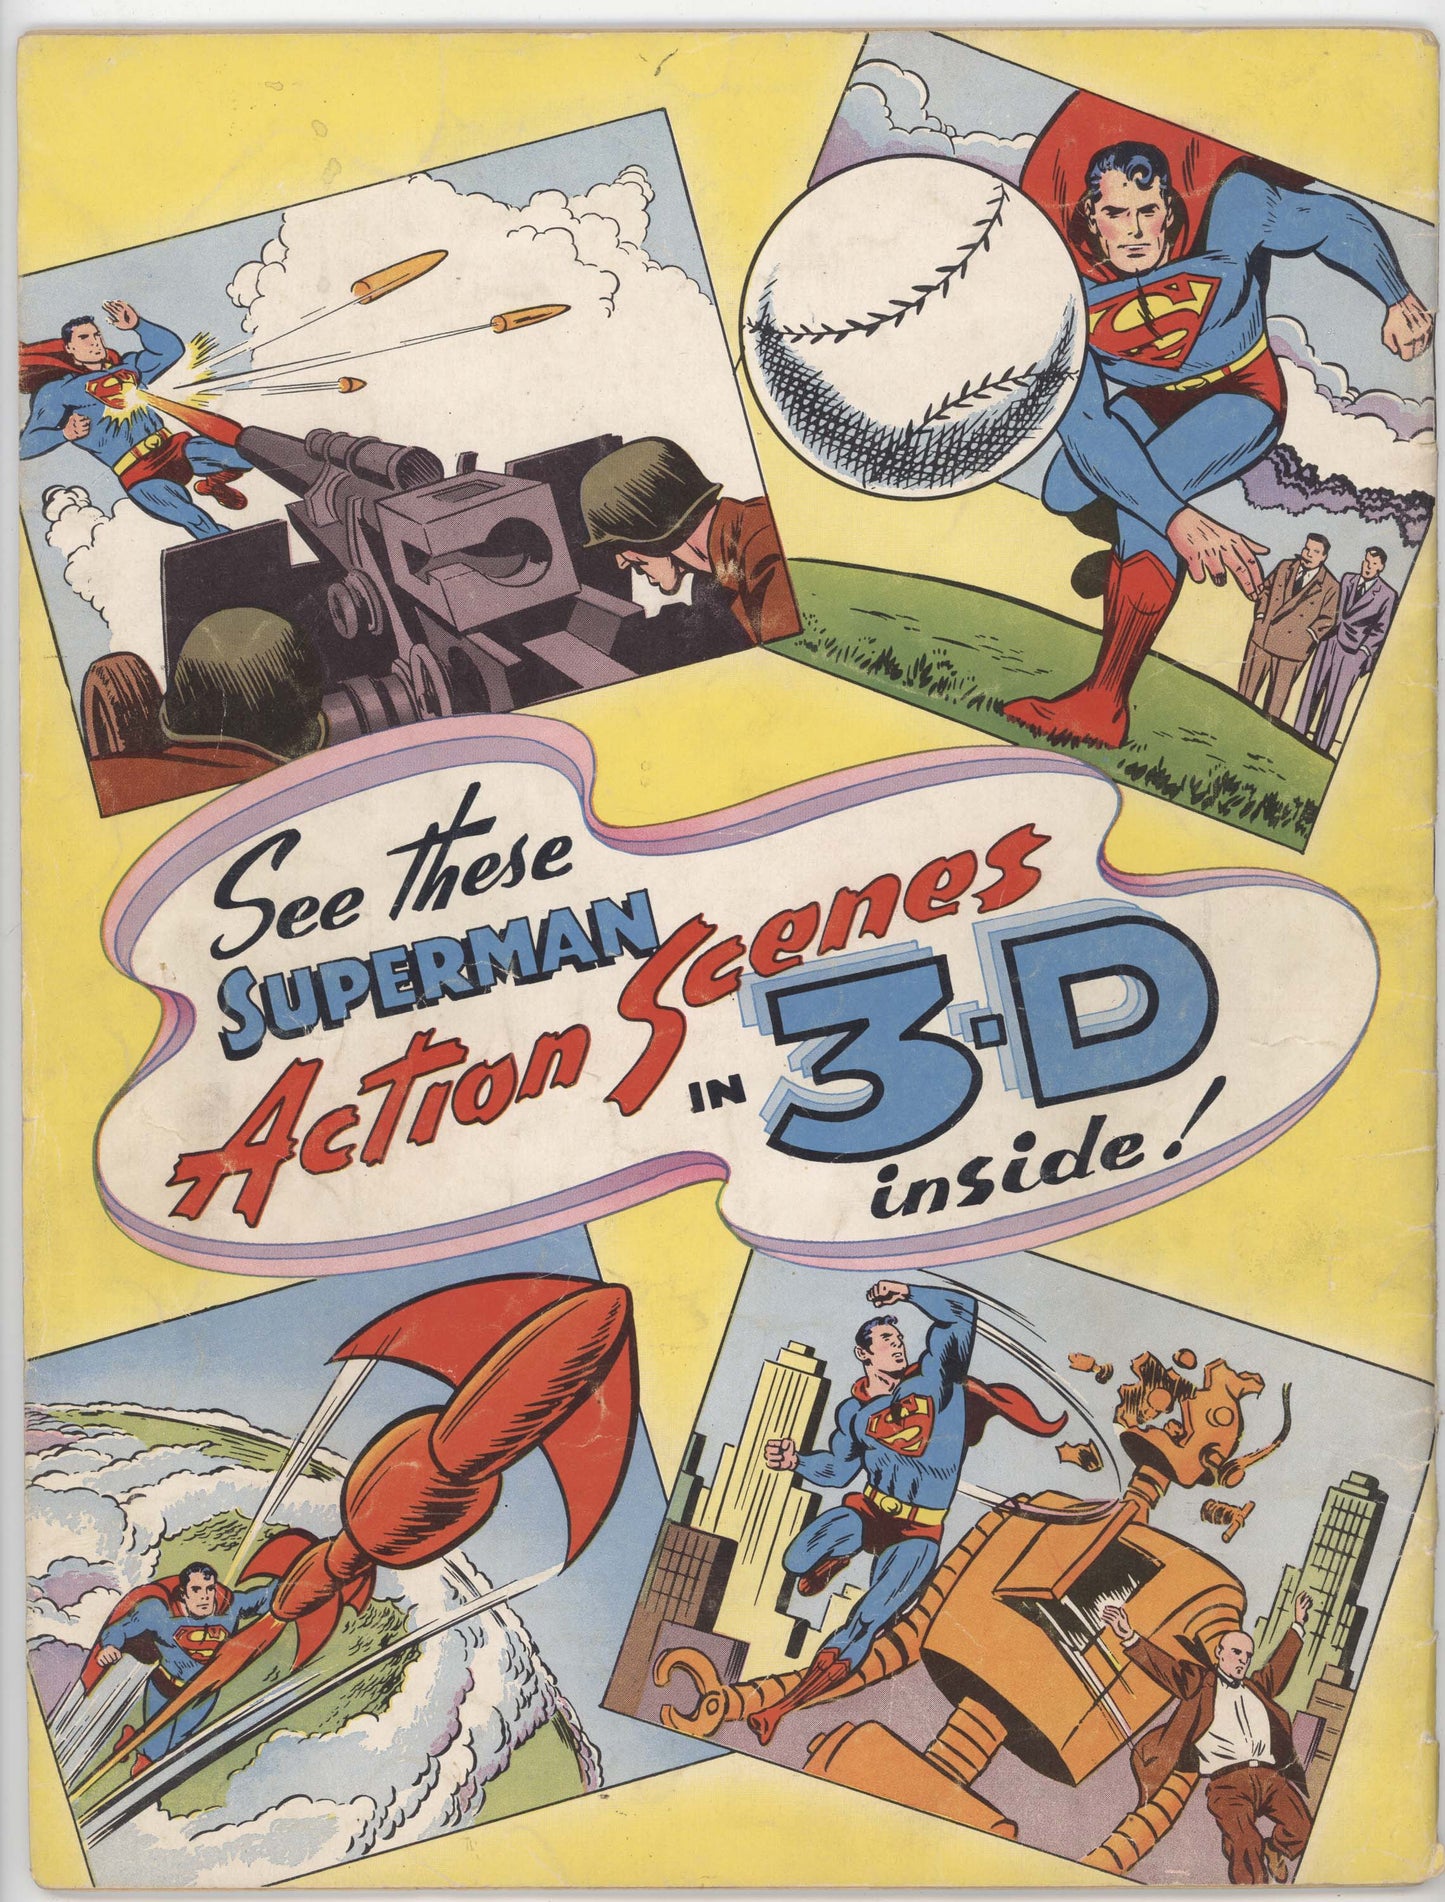 Three Dimension Adventures Of Superman 1 DC 1953 VG No Glasses